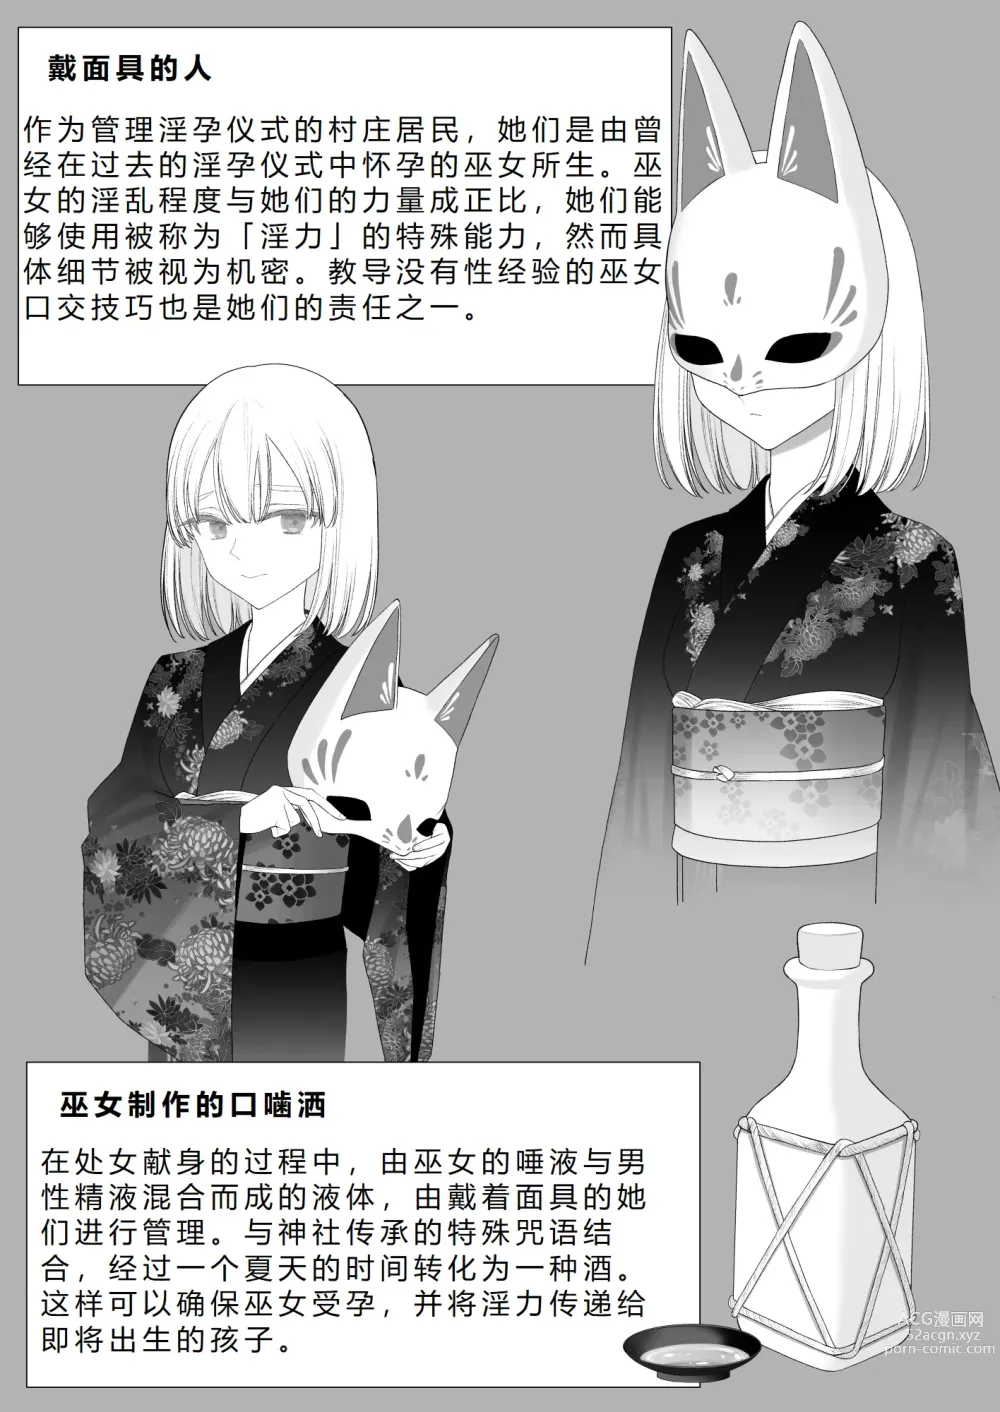 Page 108 of doujinshi 淫孕的仪式